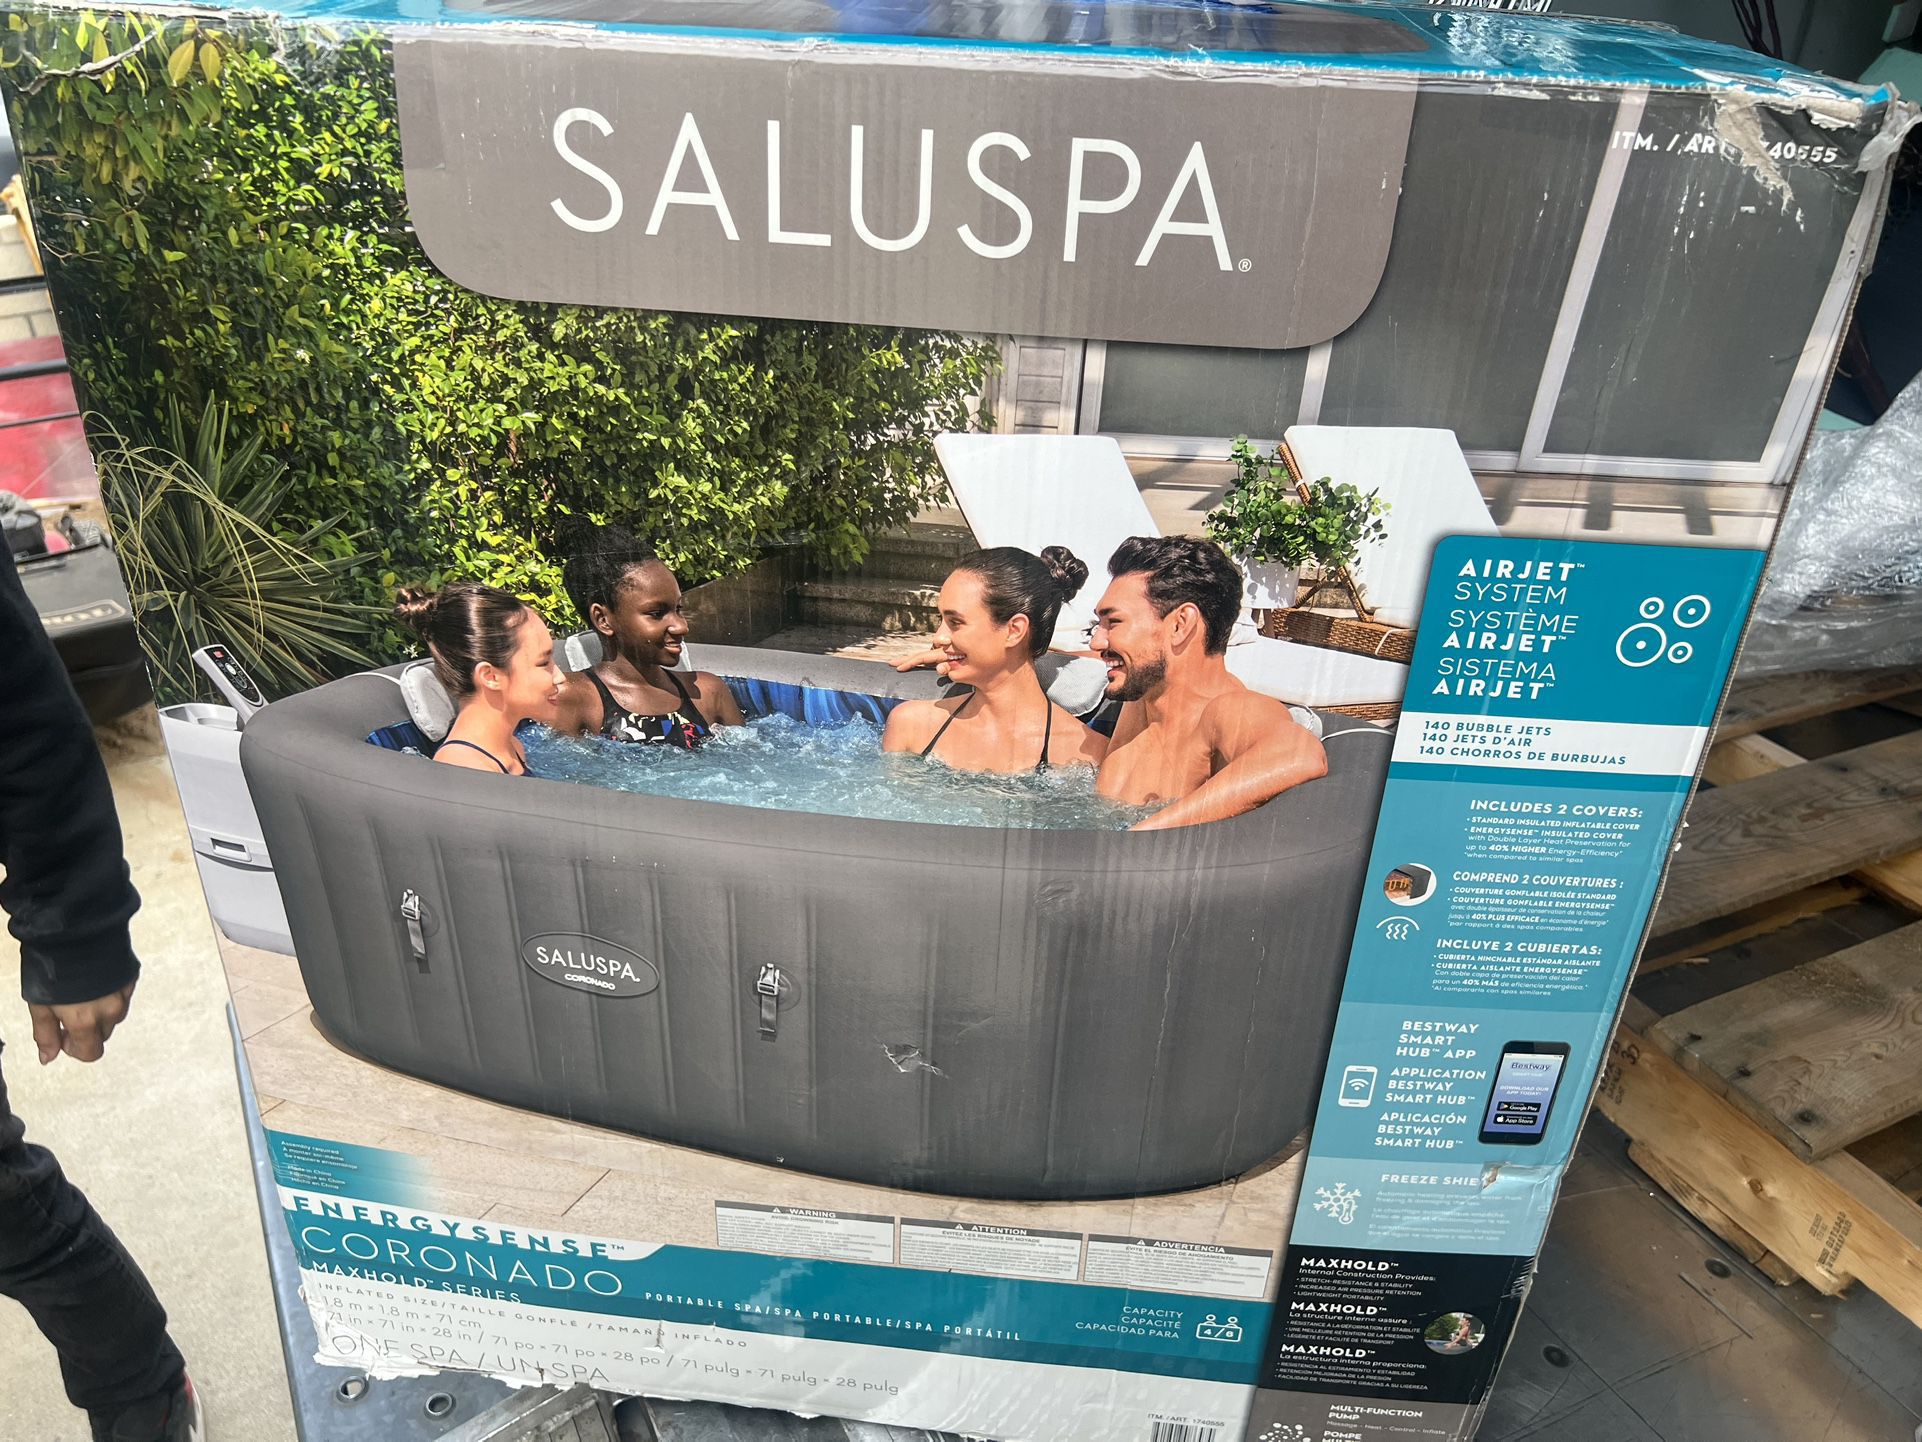 Hot Tub Saluspa Coronado 